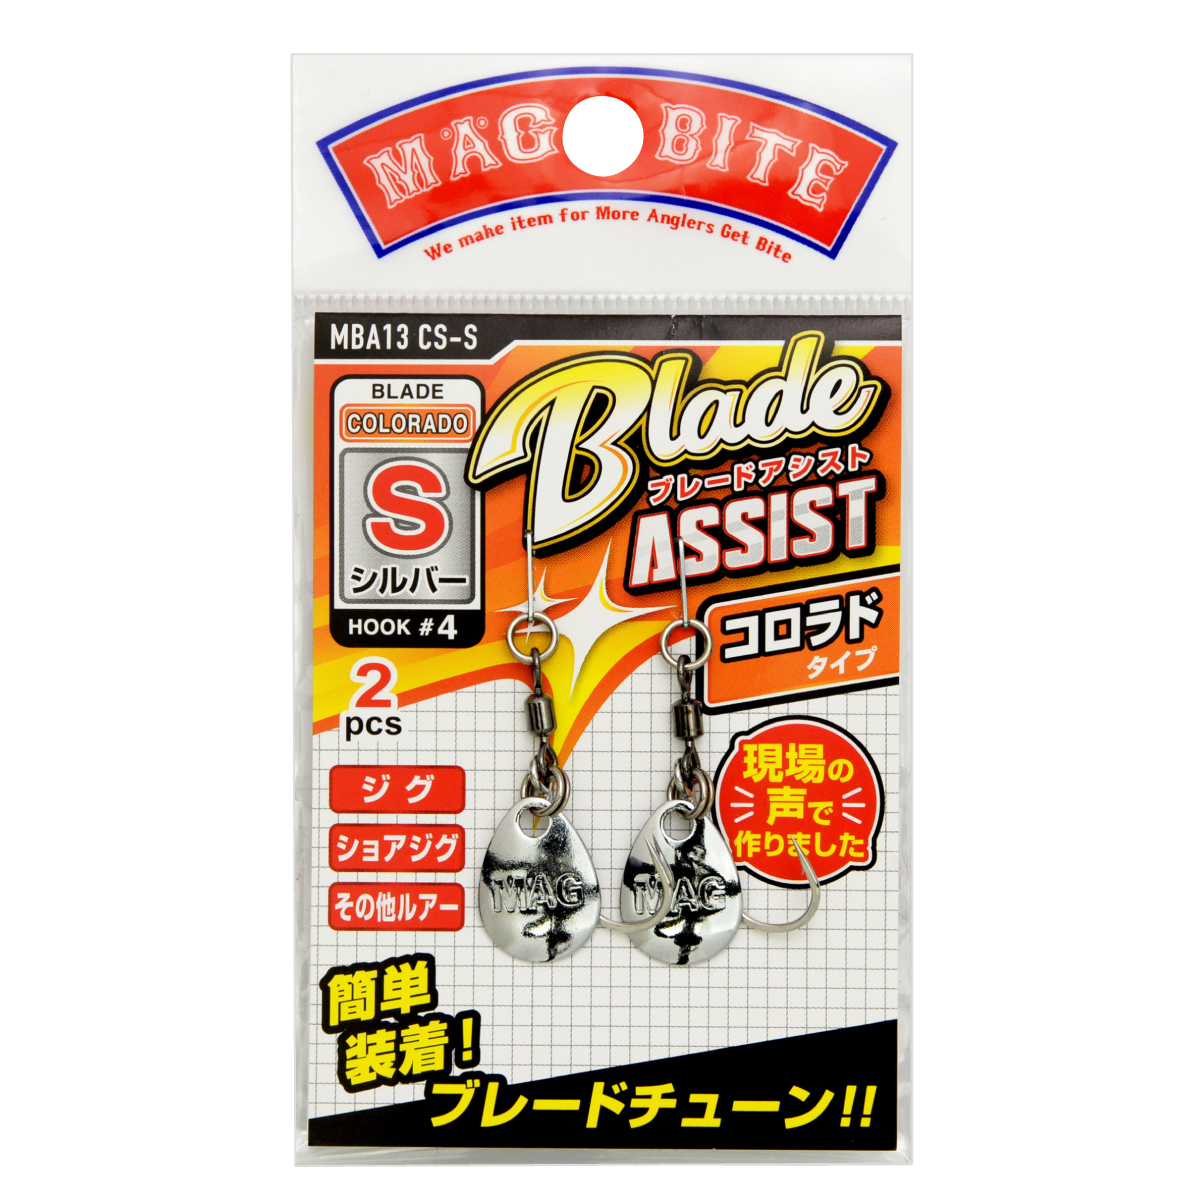 Крючки Magbite MBA13 Blade Assist S colorado silver - фото 1